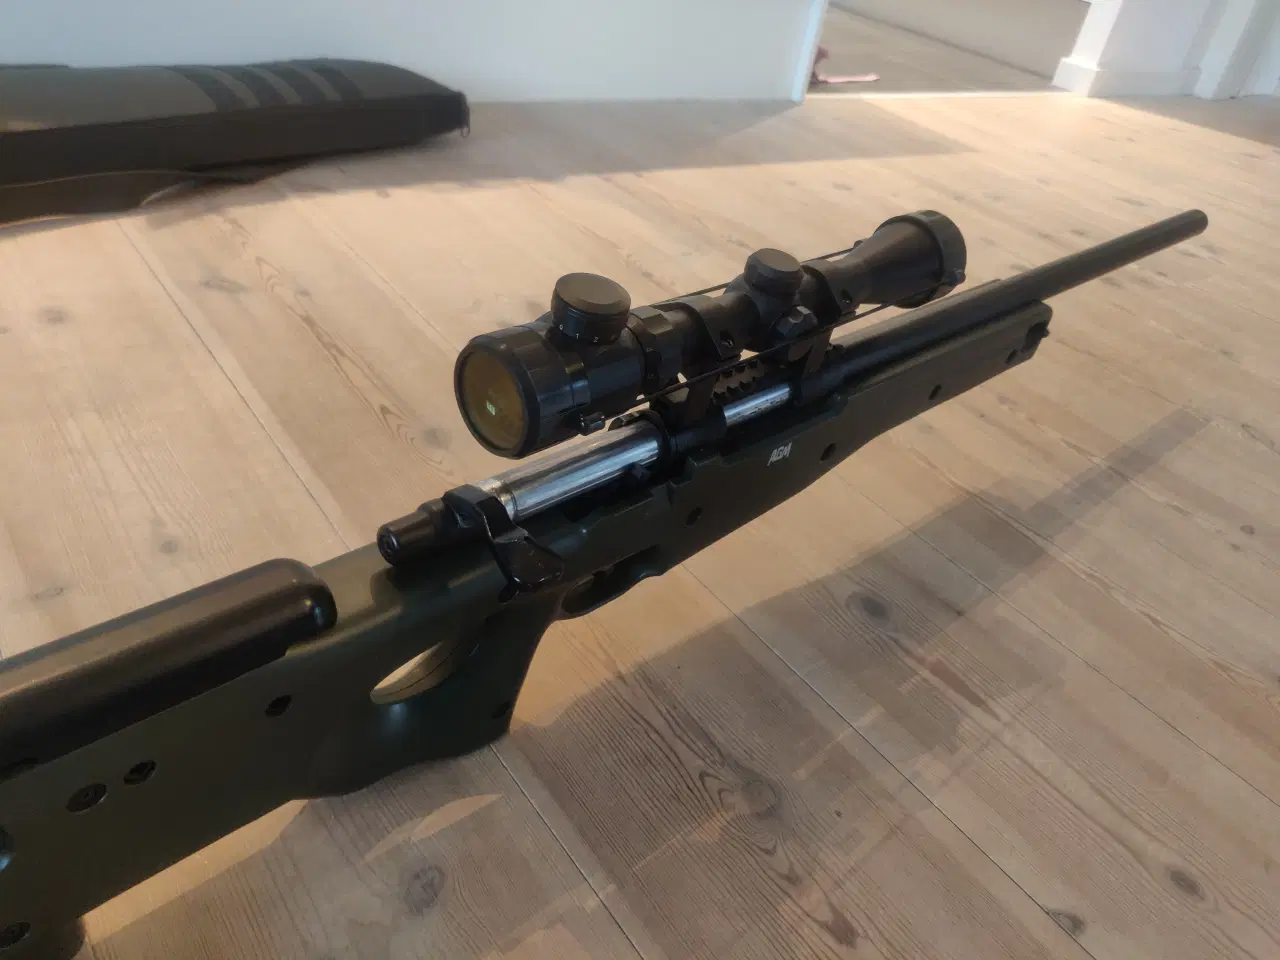 Billede 2 - Sniper rifle l96a1 3-9x40 scope med lys hardball 